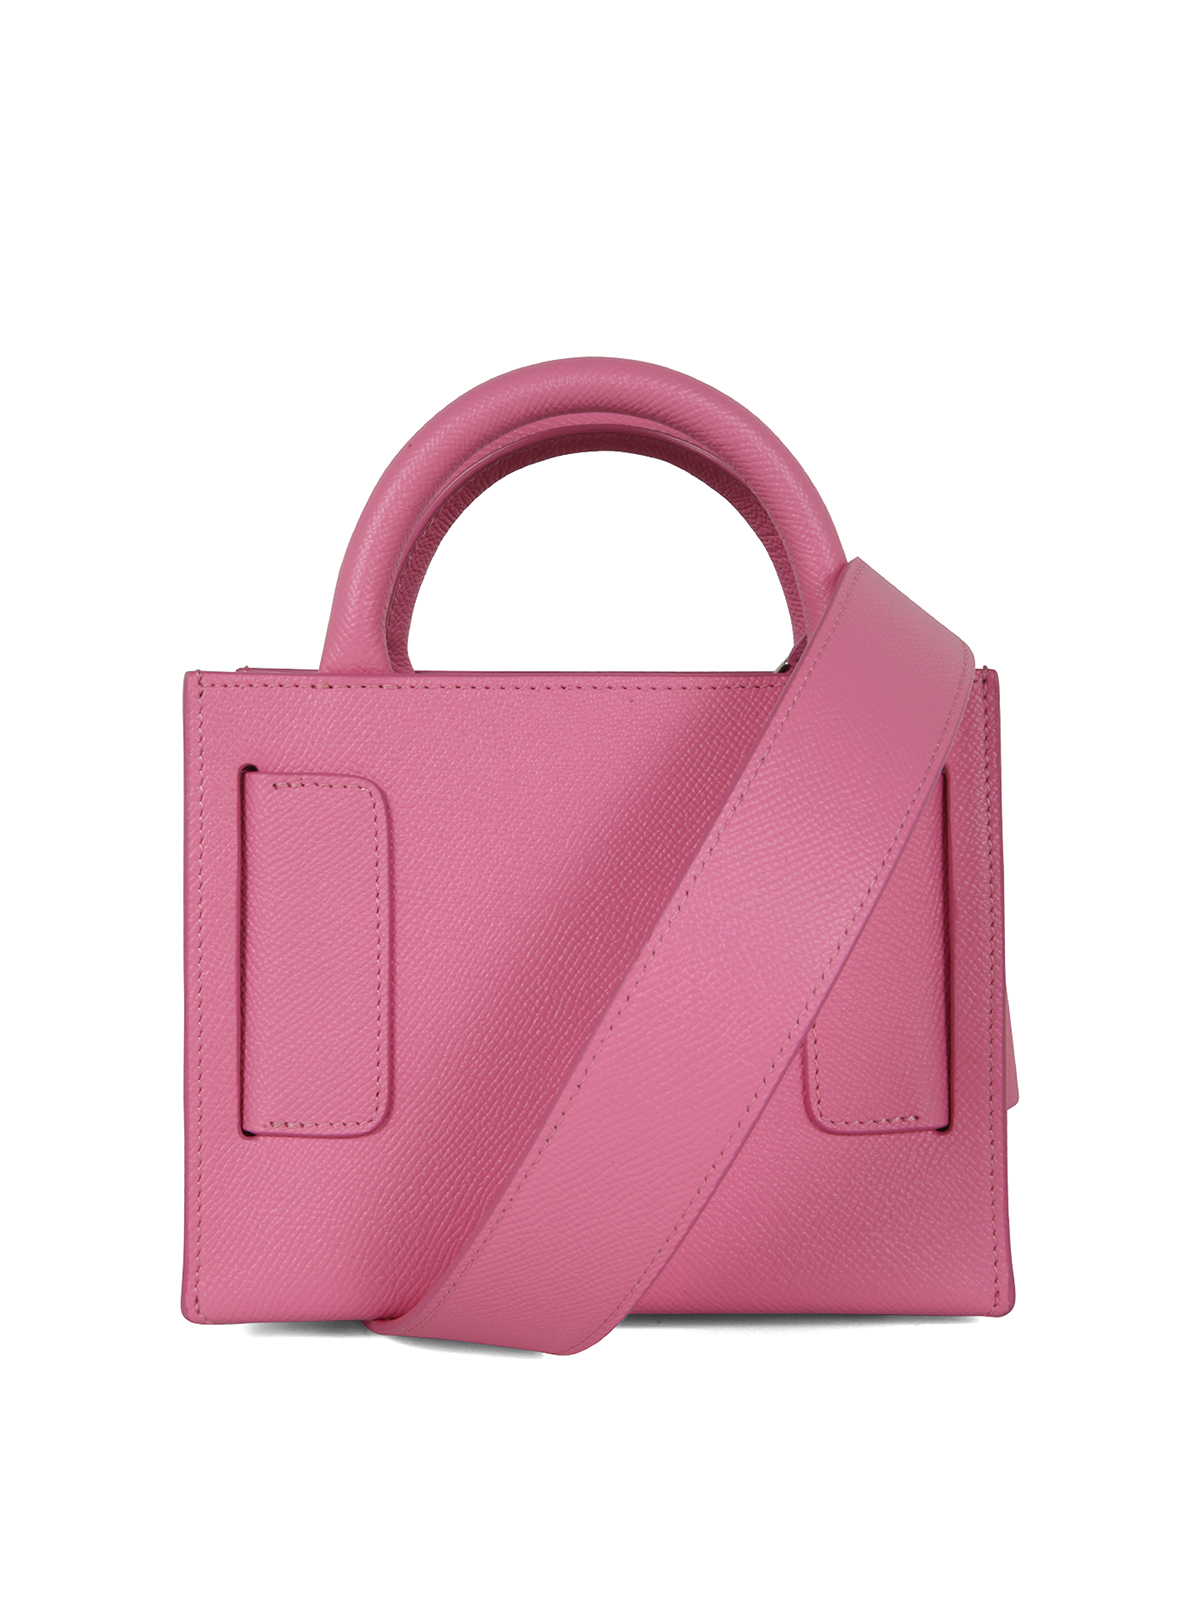 Boyy Bobby 18 Leather Handbag in Pink